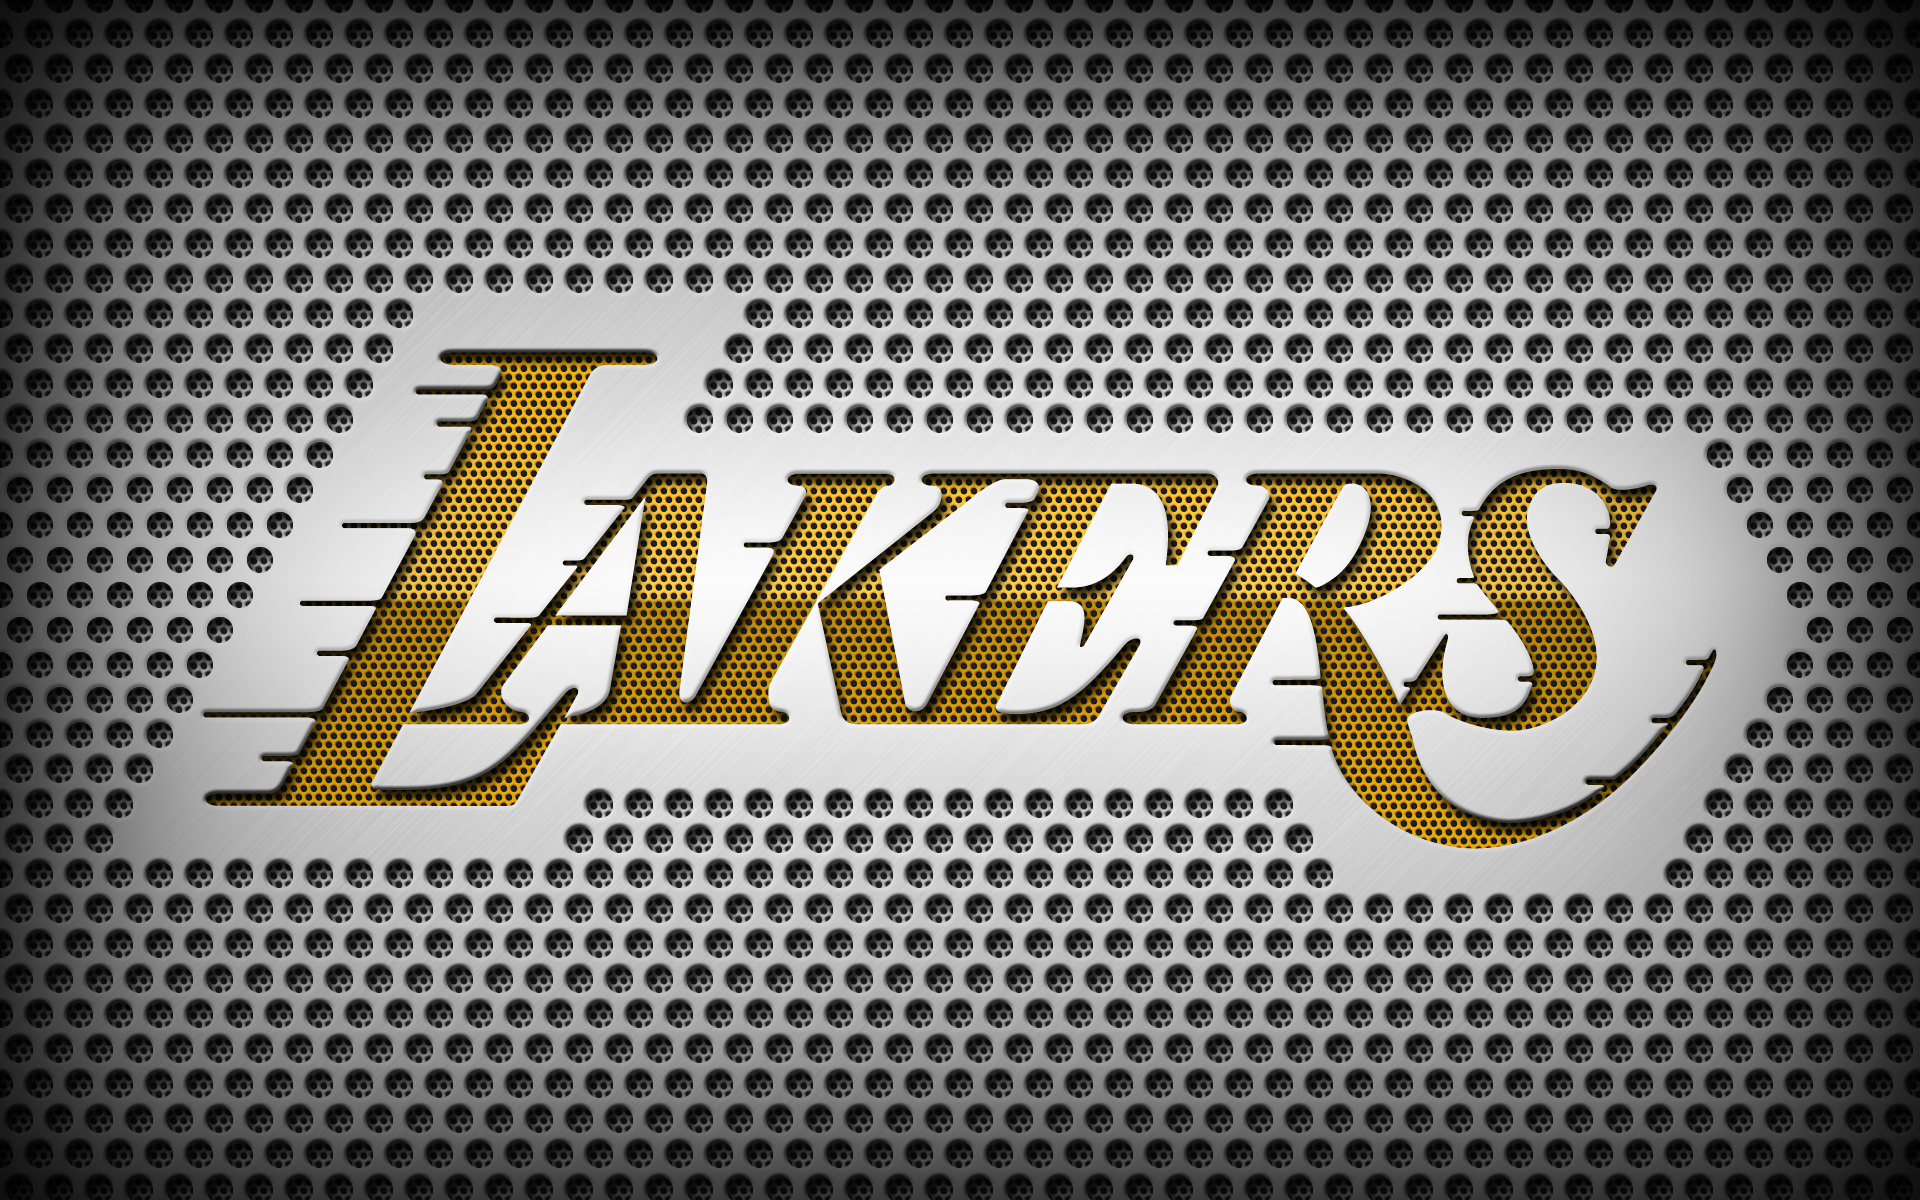 Awesome Lakers Wallpaper Image Wallpaperlepi